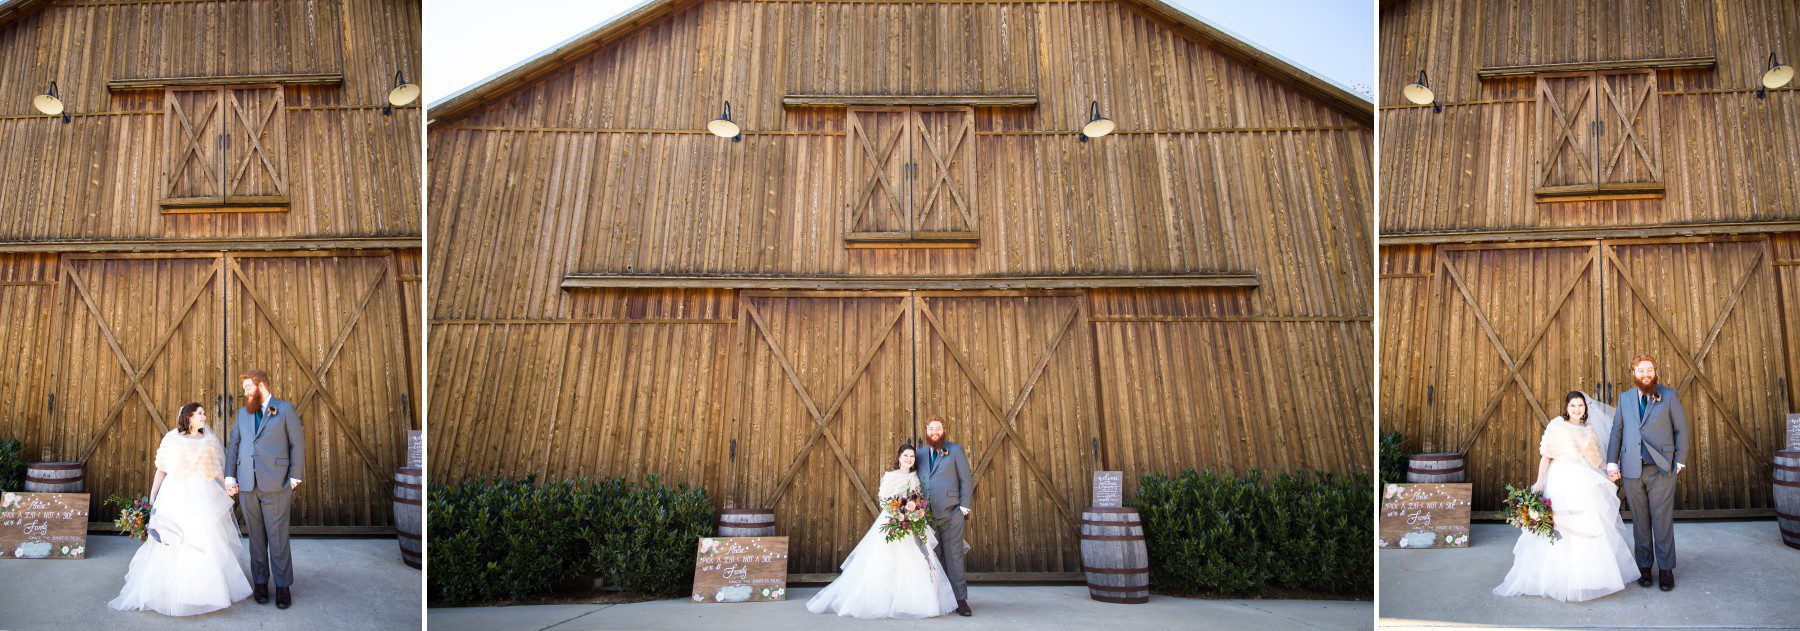 Nashville wedding photographer  barn venue Saddle Woods Farm Murfreesboro, TN 